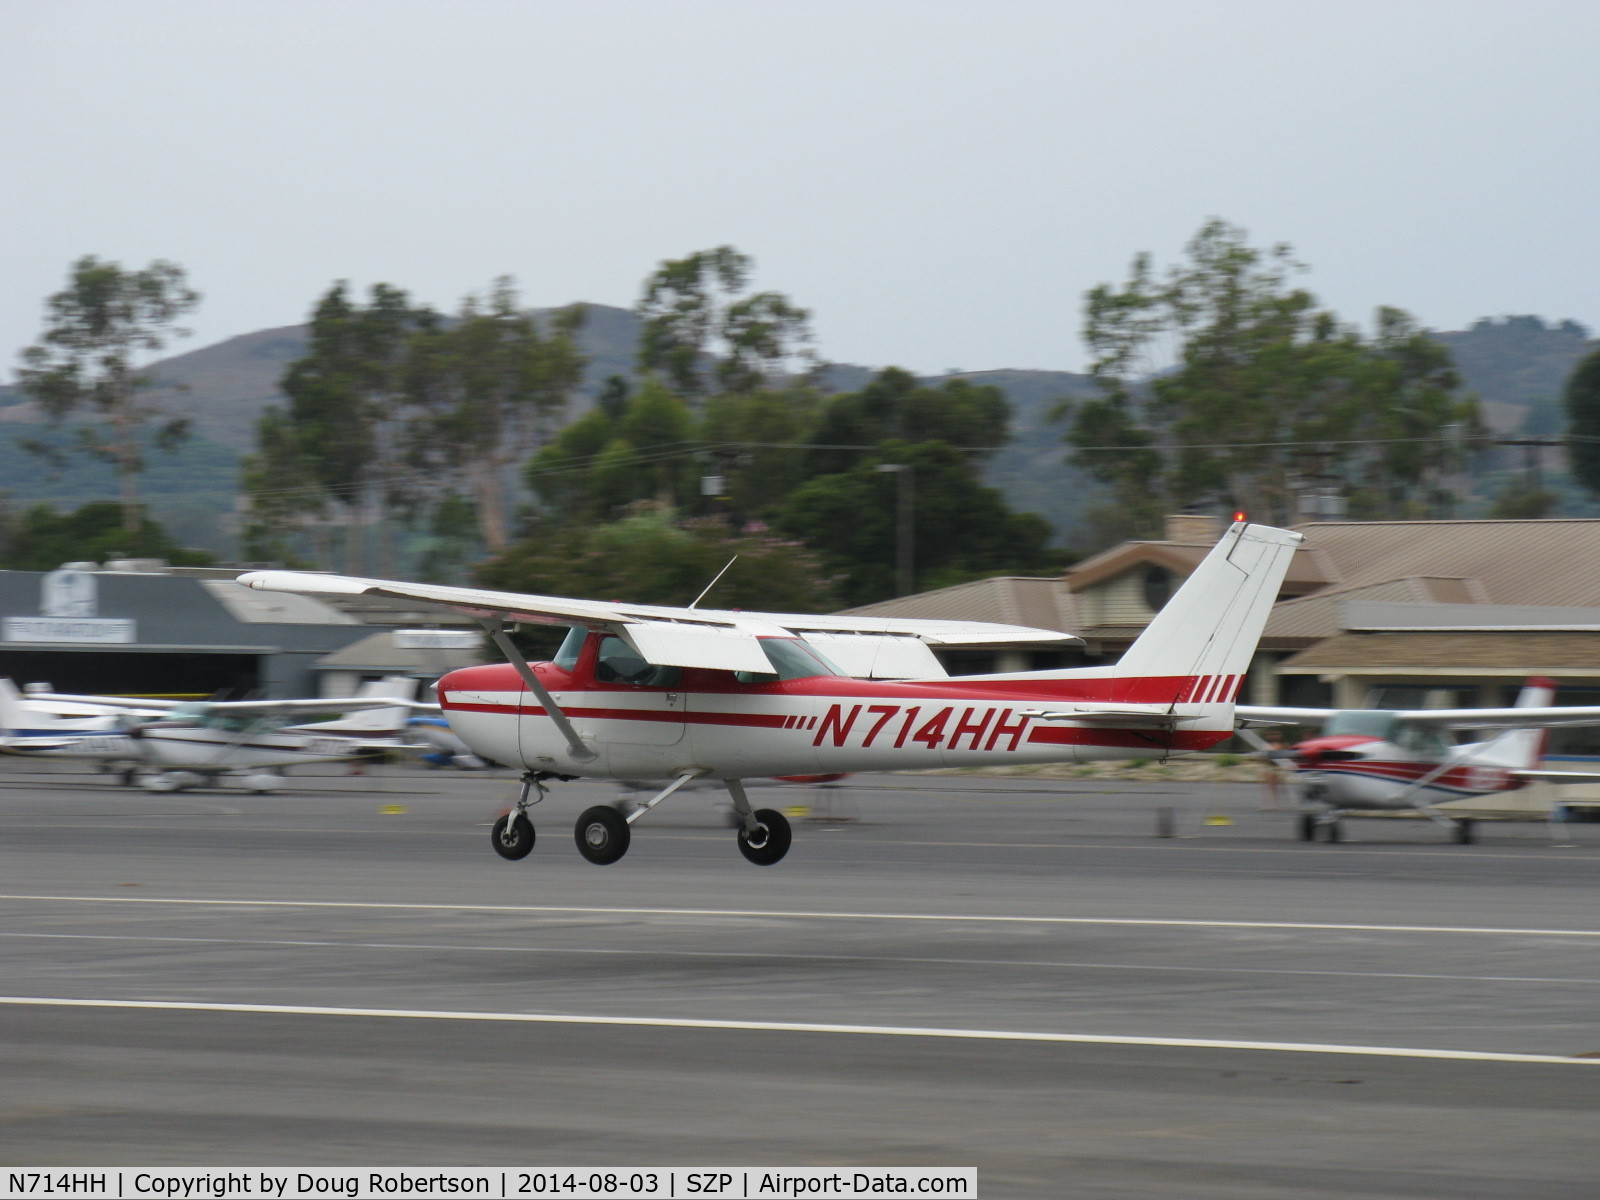 N714HH, 1977 Cessna 150M C/N 15079185, 1977 Cessna 150M, Continental O-200 100 Hp, flaps landing Rwy 22